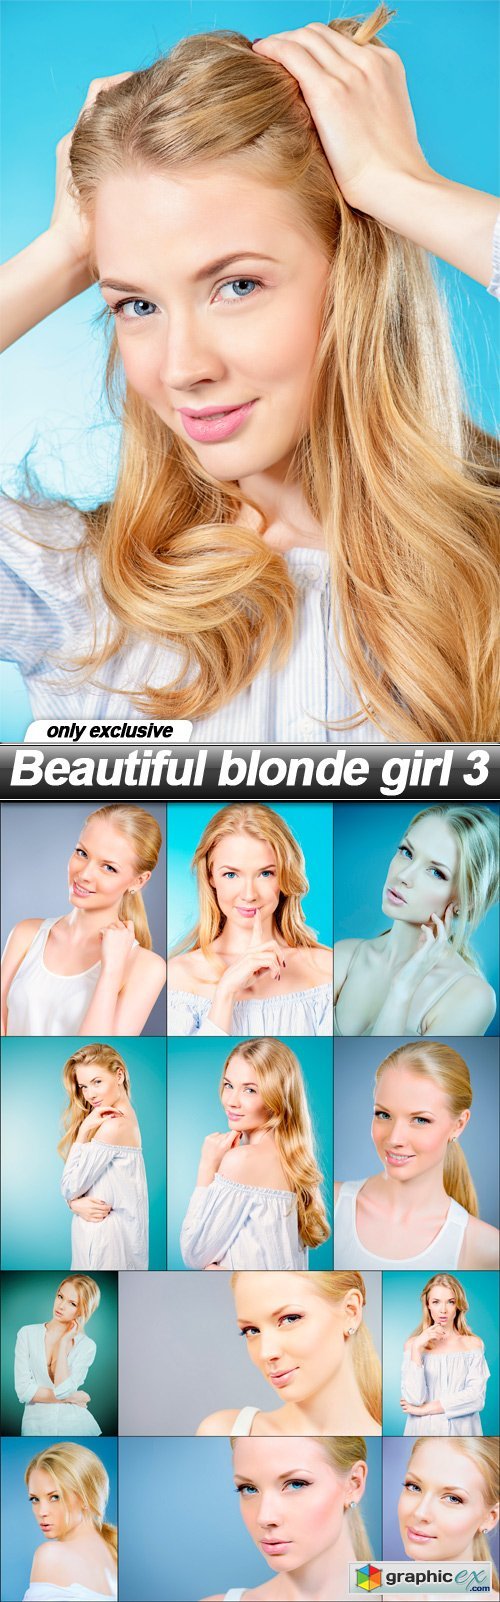 Beautiful blonde girl 3 - 13 UHQ JPEG